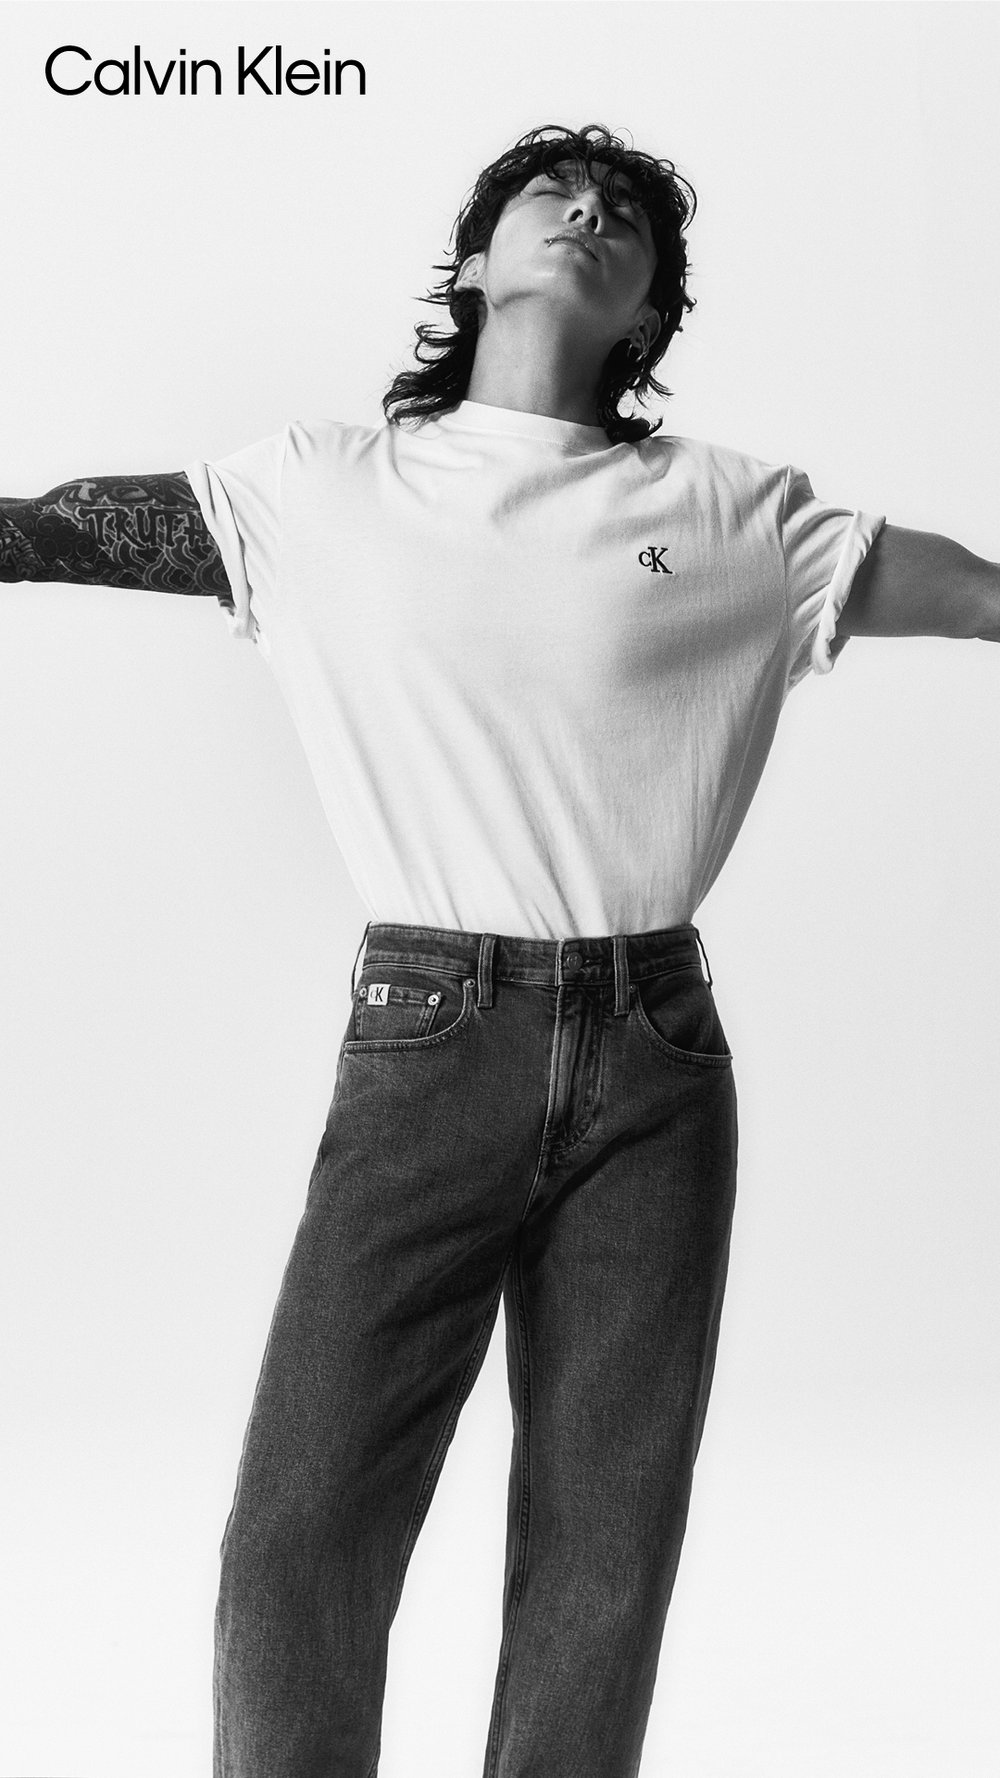 UPSIZE PH | Jung Kook Shines In Calvin Klein